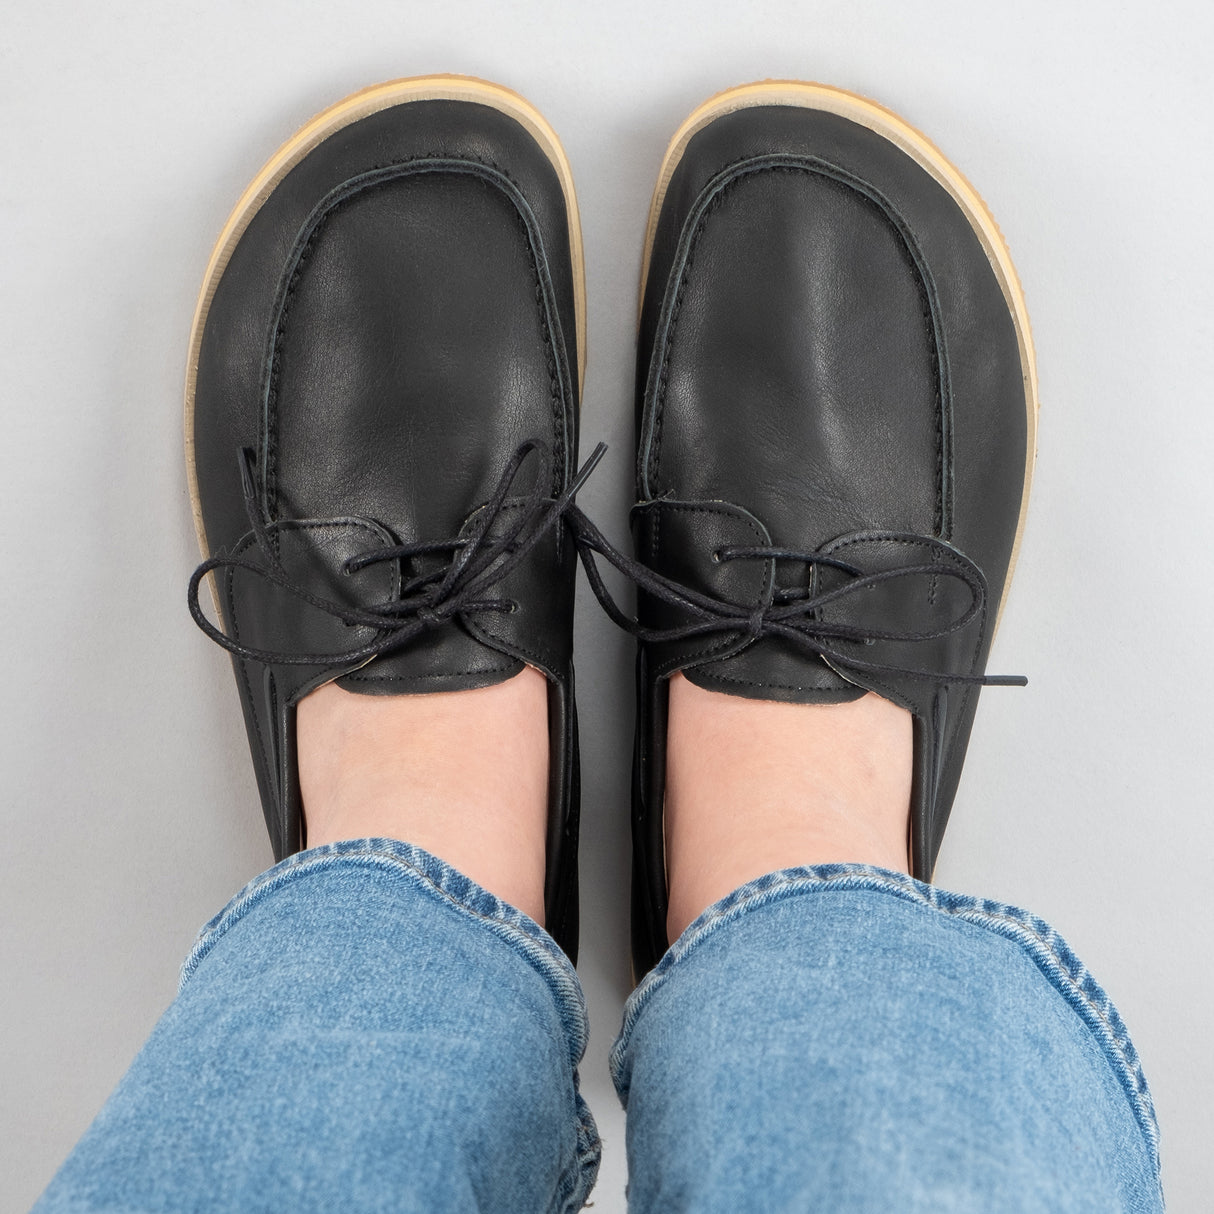 Men's Black Boat Shoes